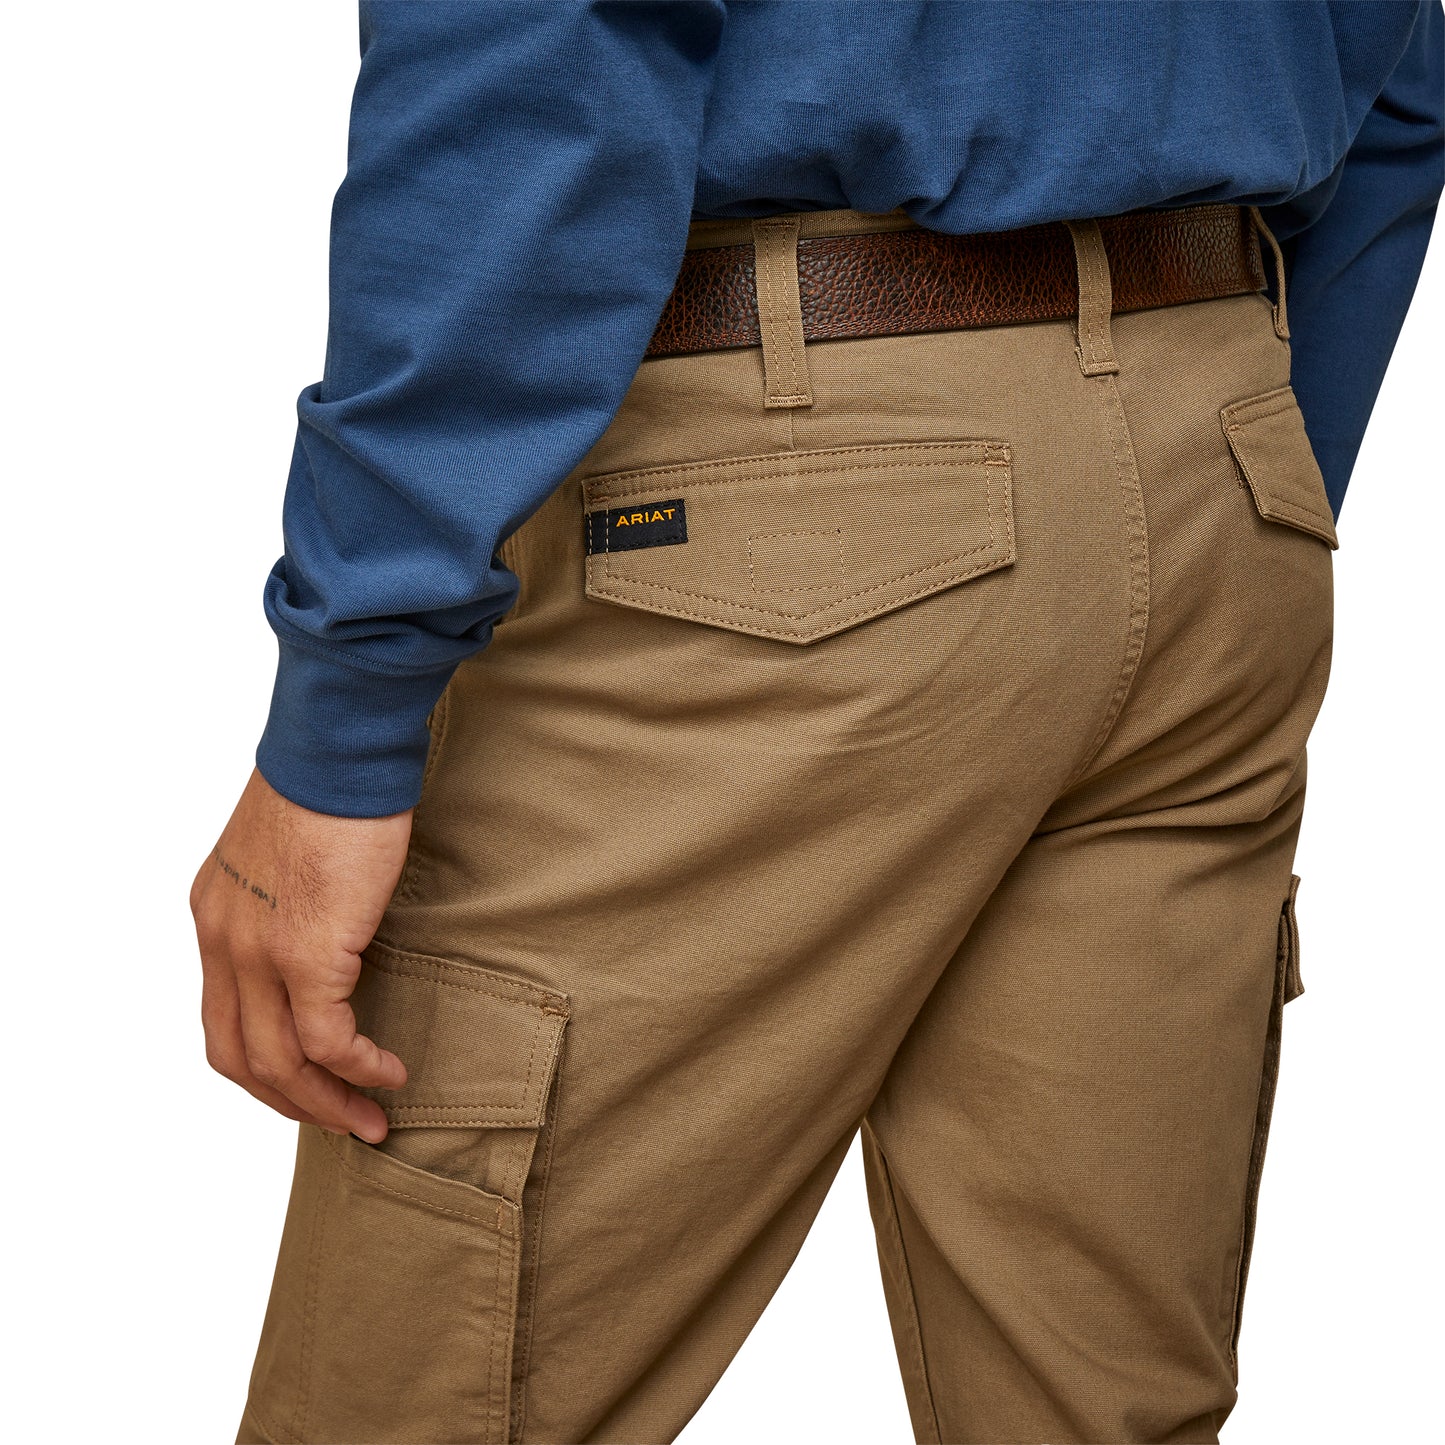 Buy LIFE Khaki Solid Cotton Stretch Slim Fit Men's Trousers | Shoppers Stop